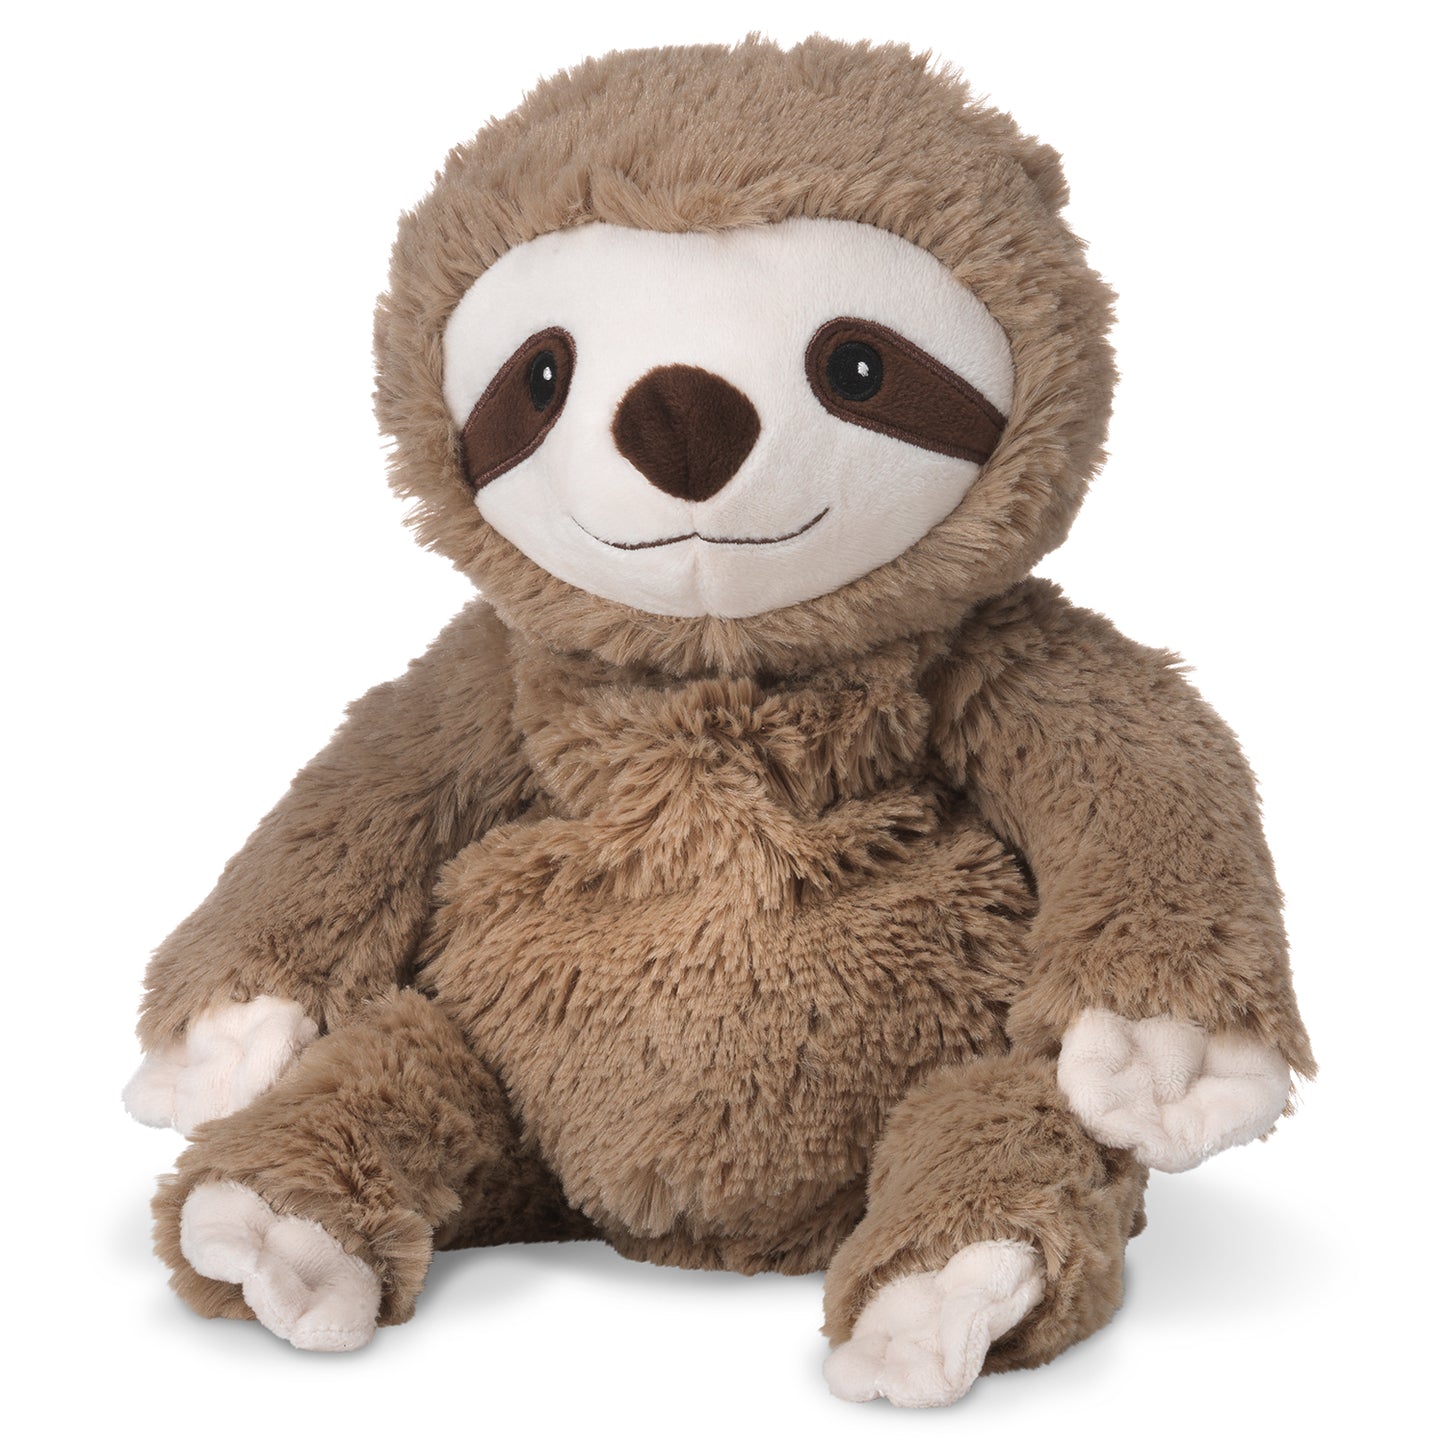 Warmies Plush Animal - Brown Sloth